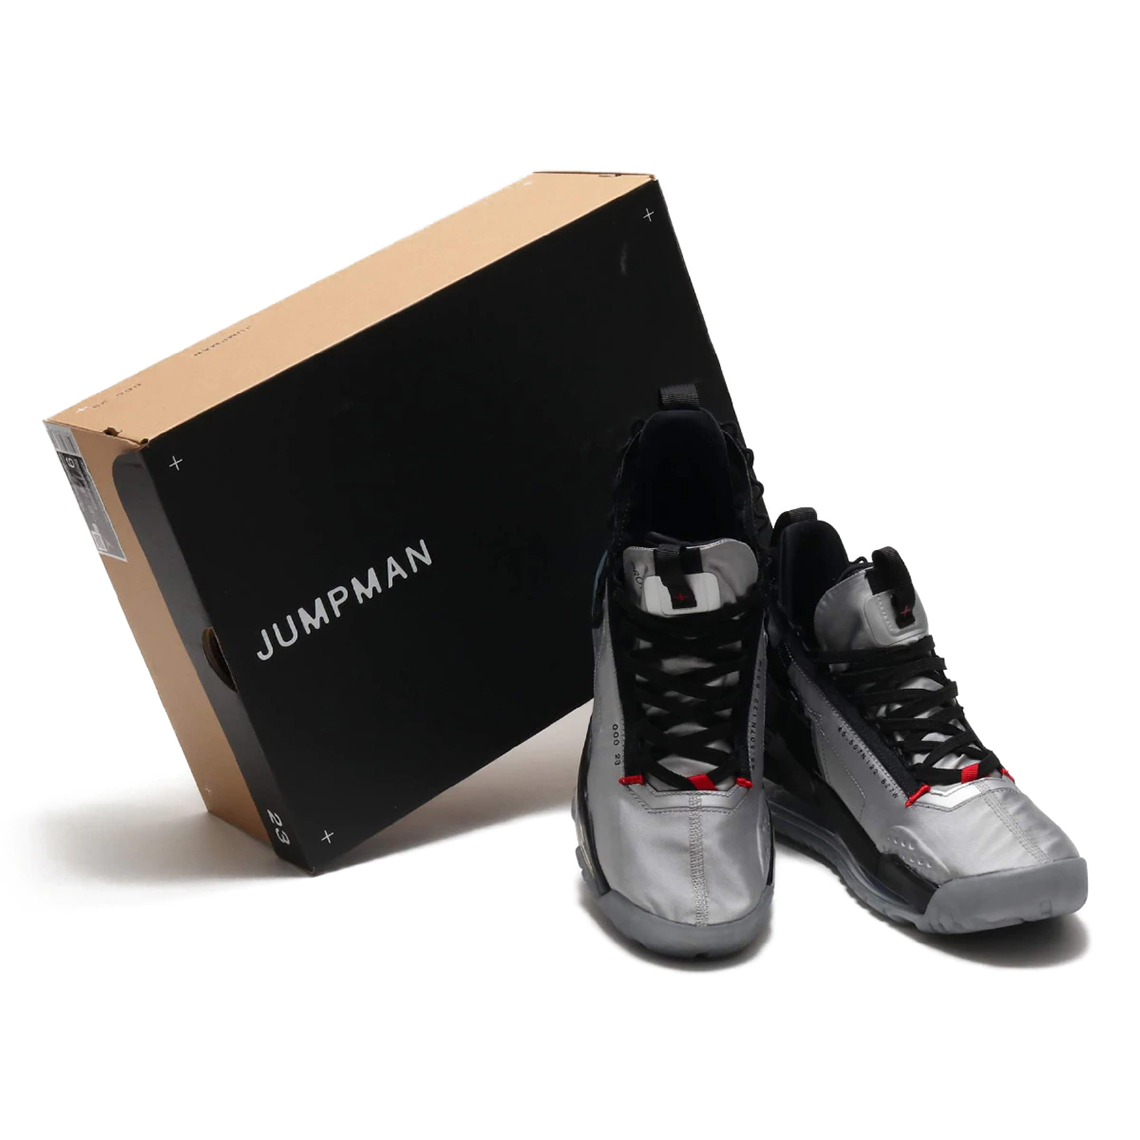 Jordan Having a similar style and look as the popular Air Jordan 12 Metallic Silver Bq6623 002 9